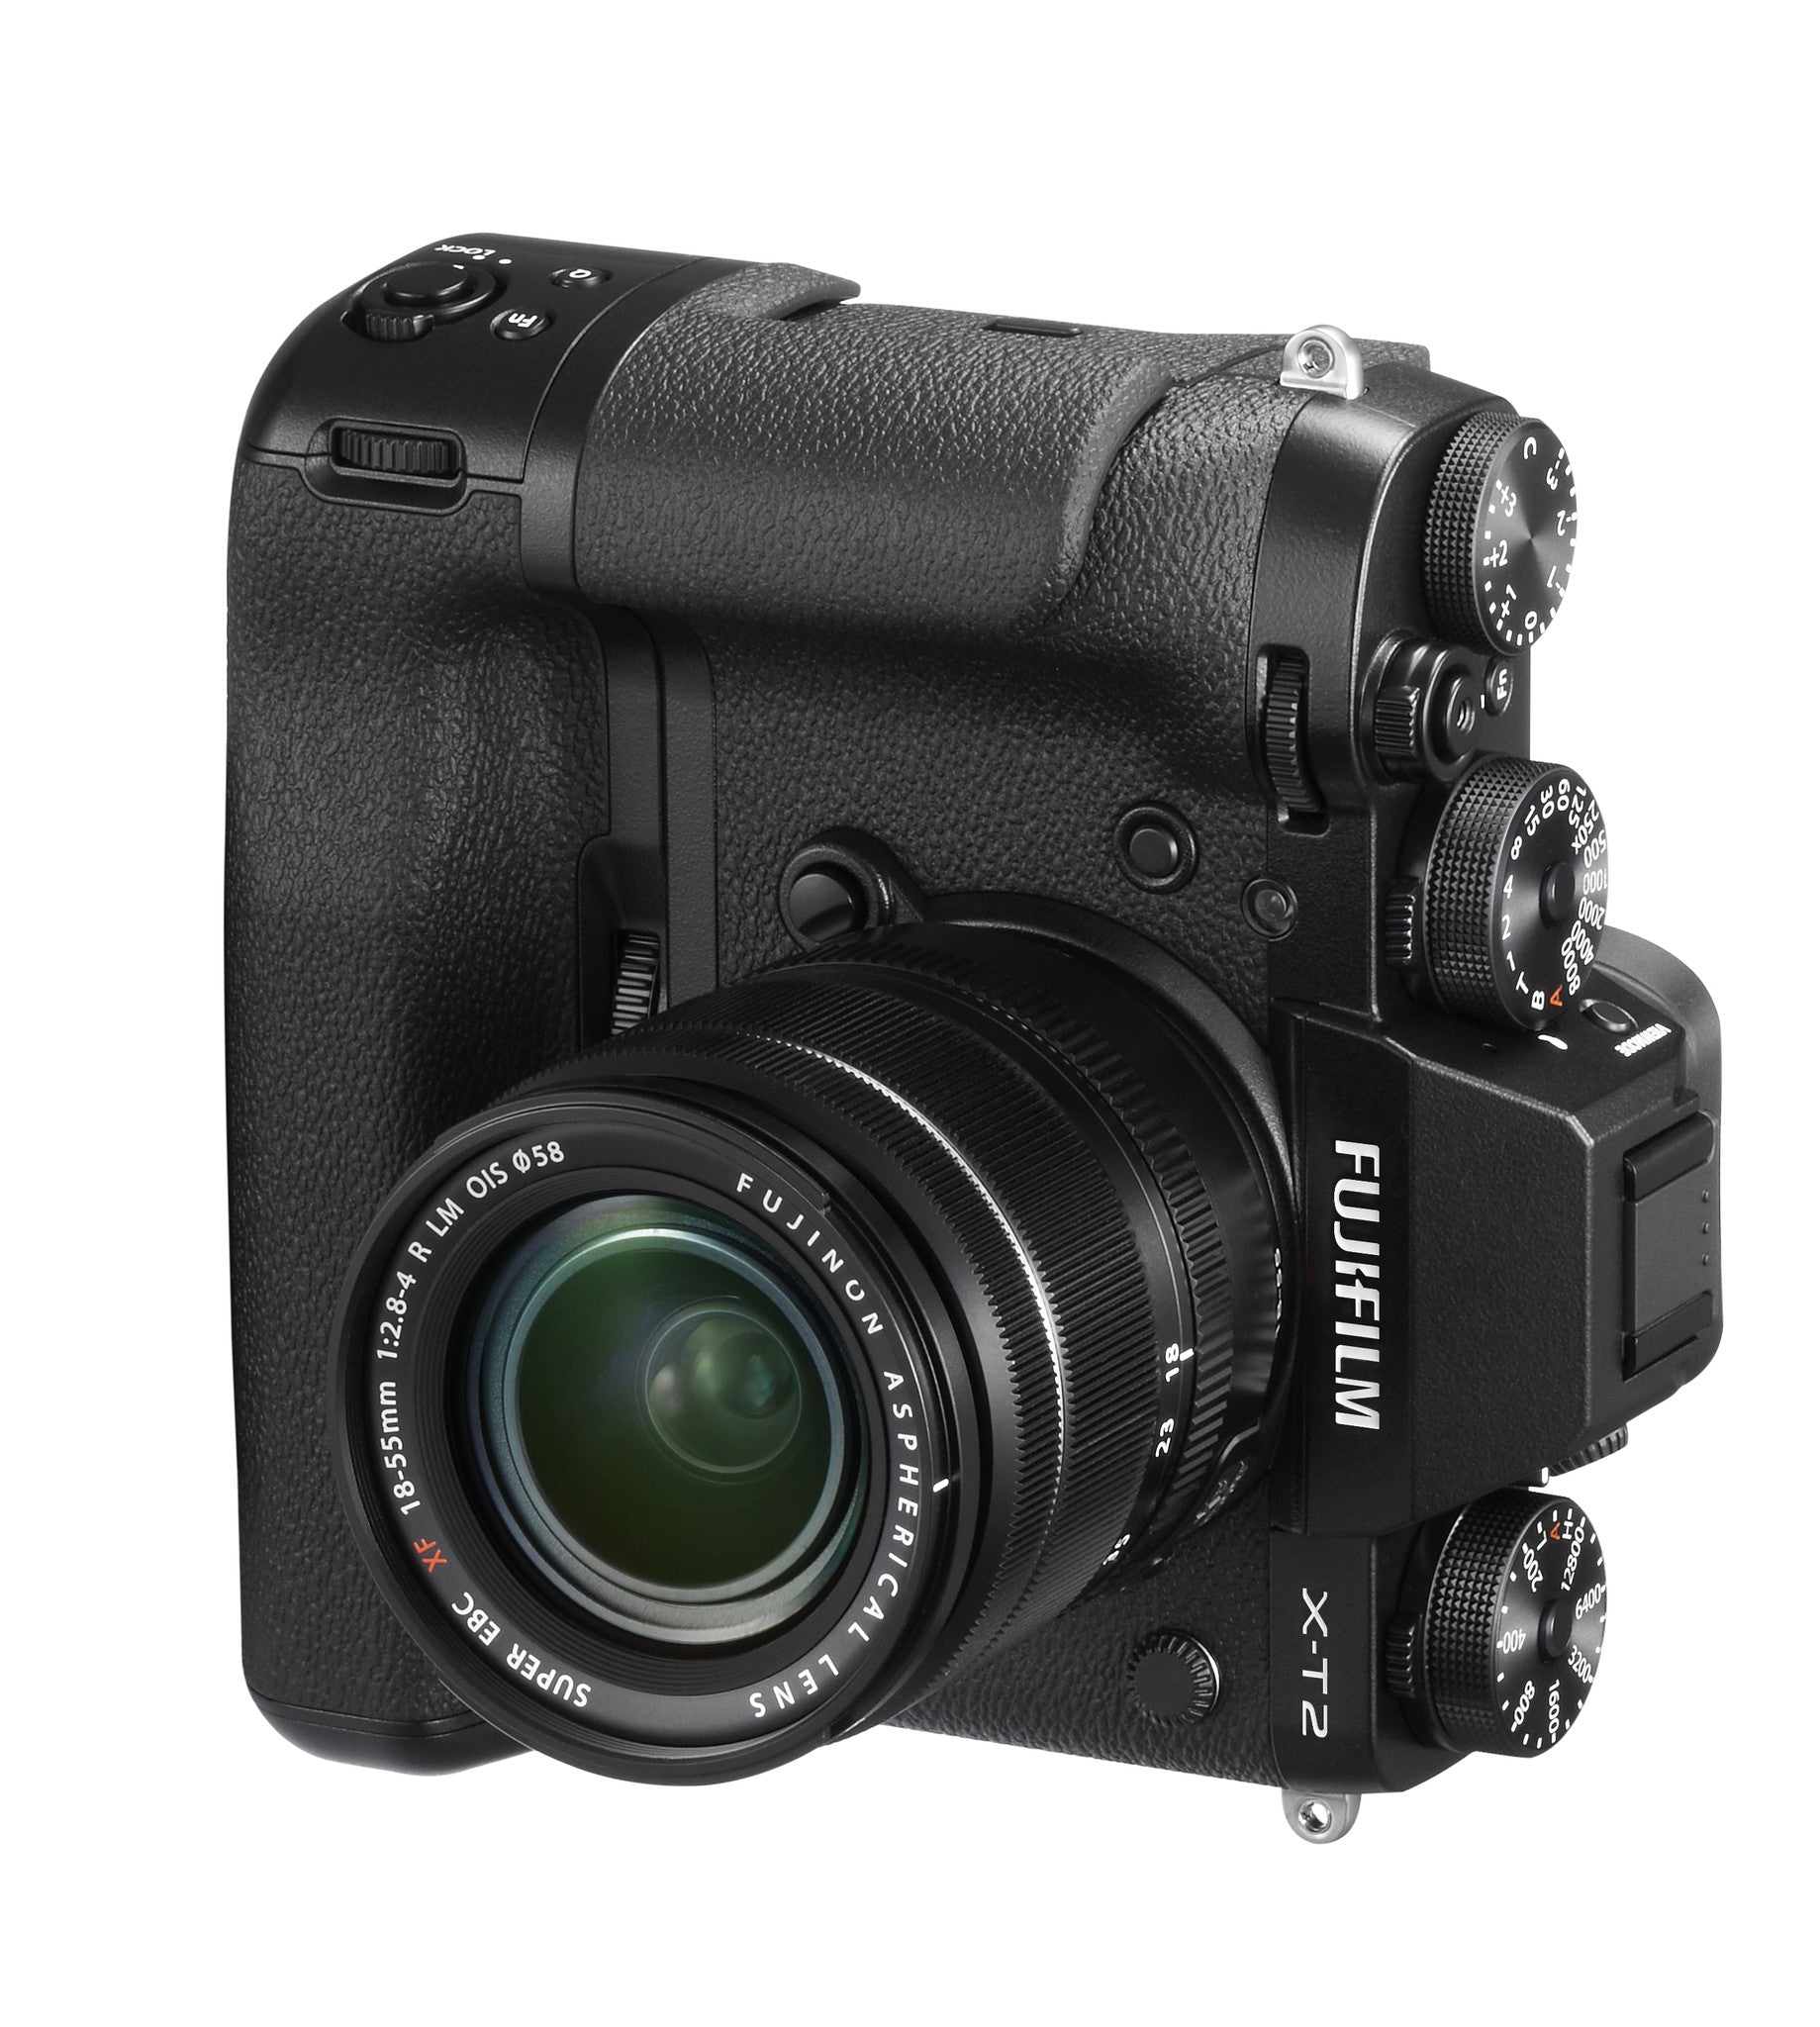 Fujifilm X-T2 Digital Camera w/ 18-55mm Lens Kit (Black), camera mirrorless cameras, Fujifilm - Pictureline  - 4